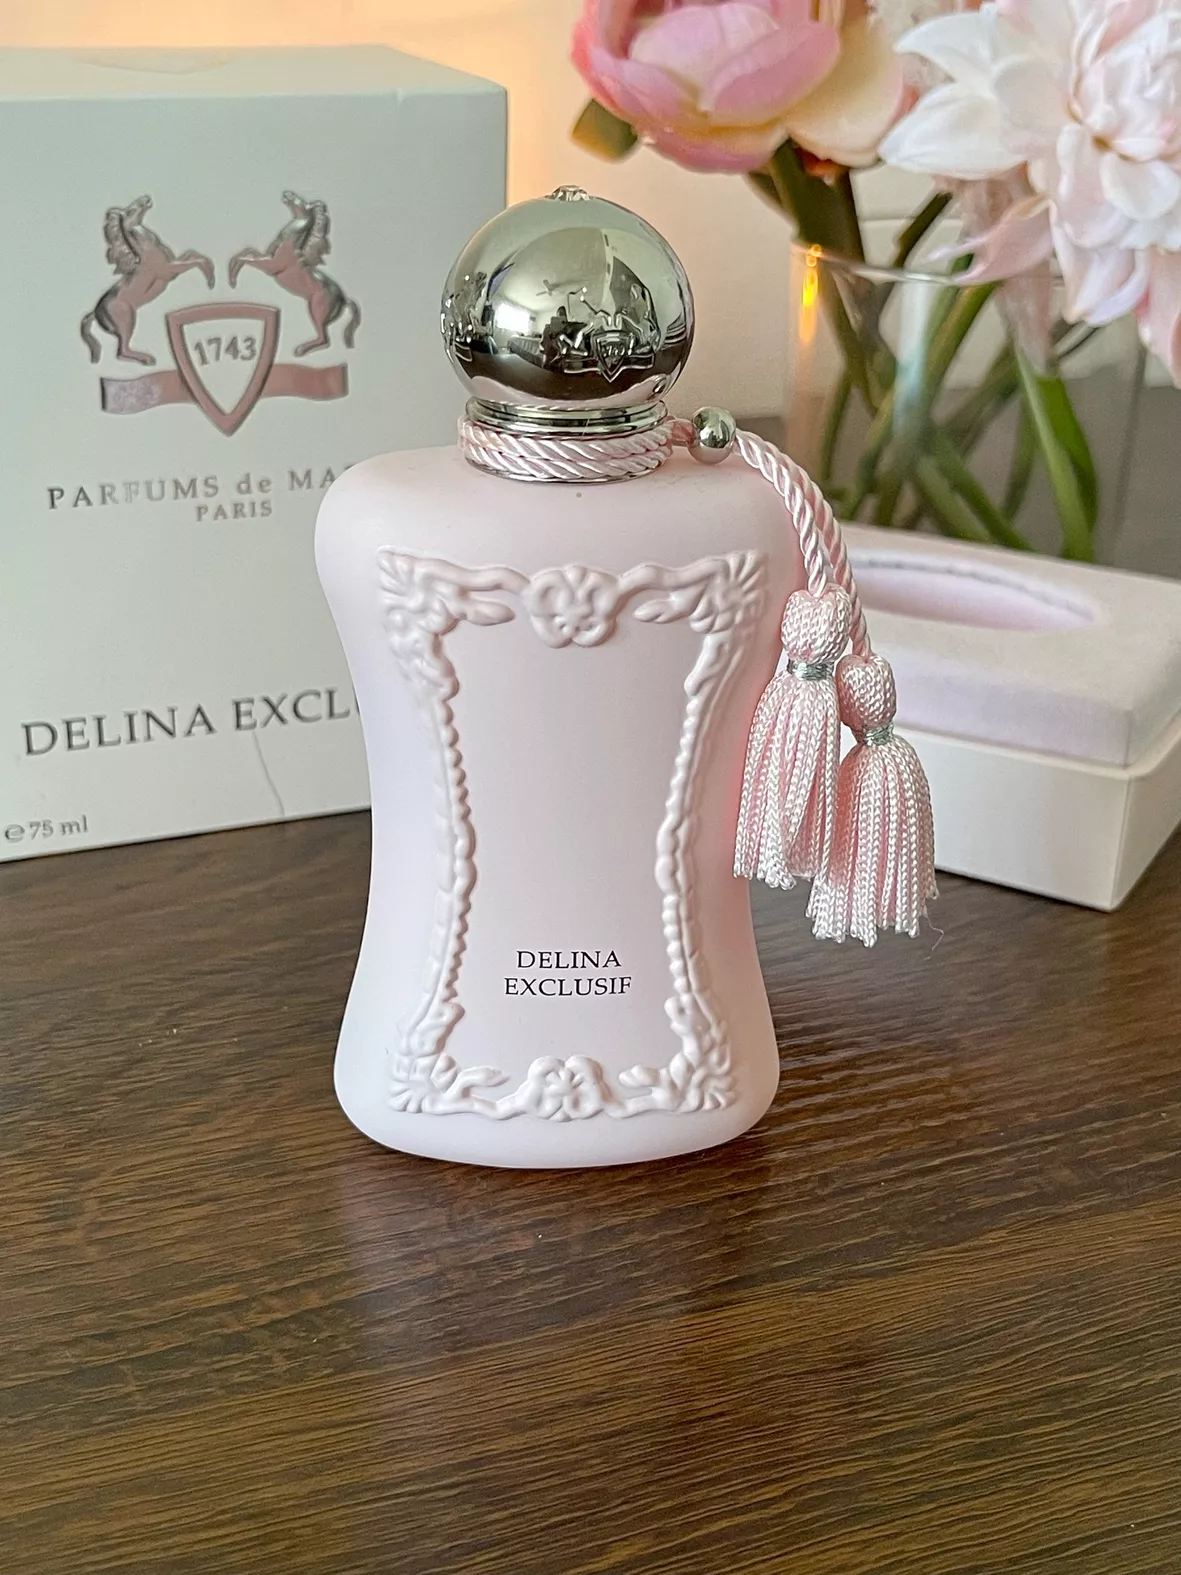 chanel perfume holiday set